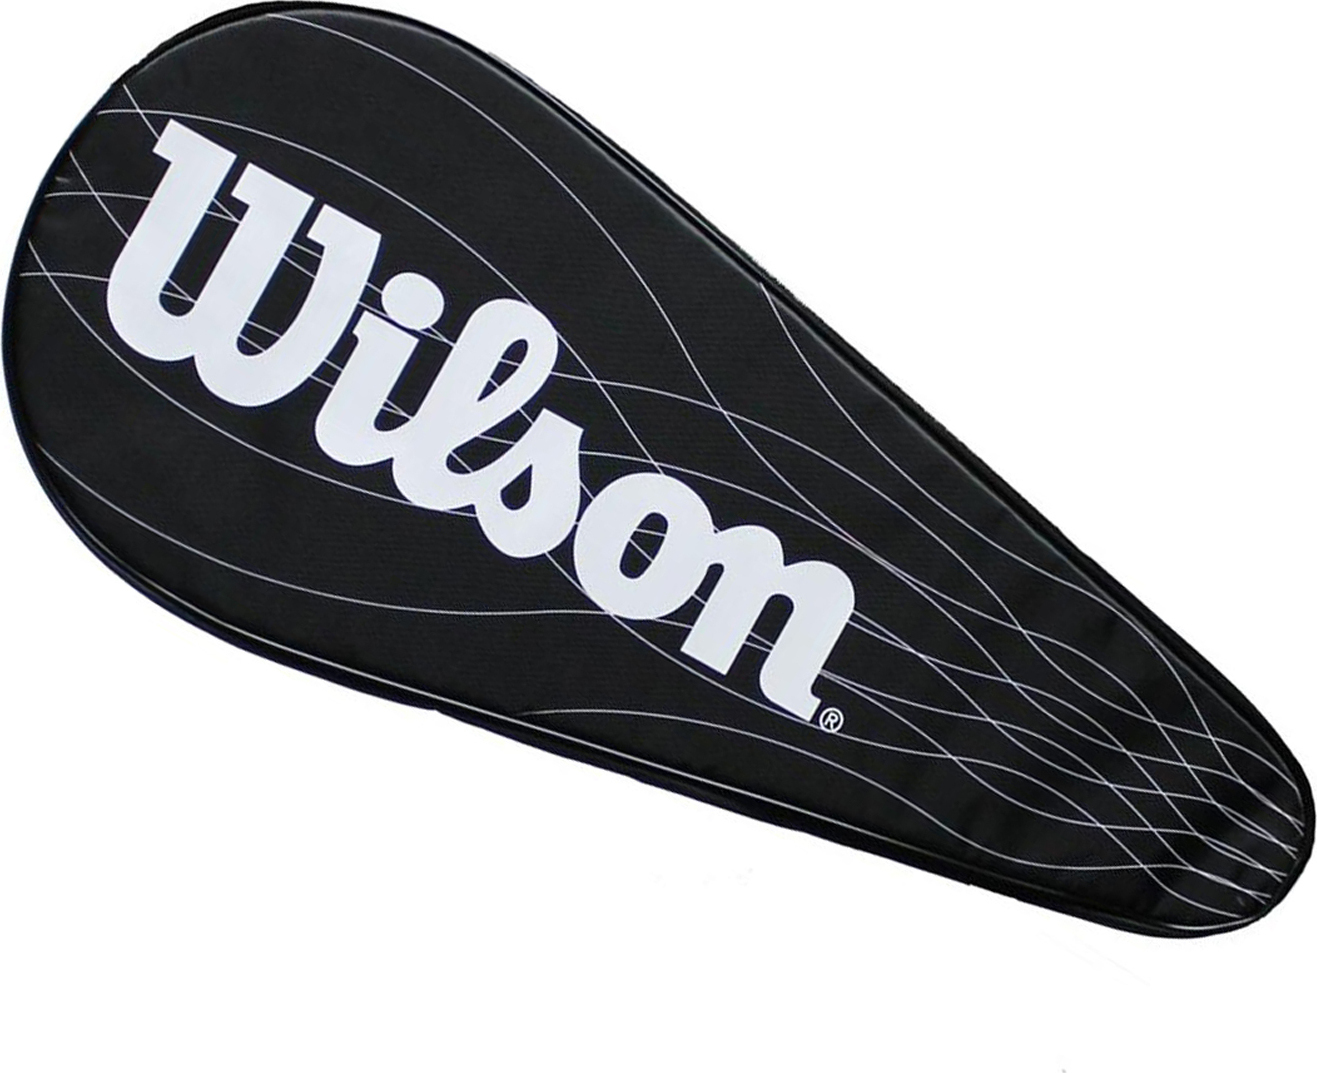 Wilson Premium Θήκη Τένις 1 Ρακέτα Μαύρη